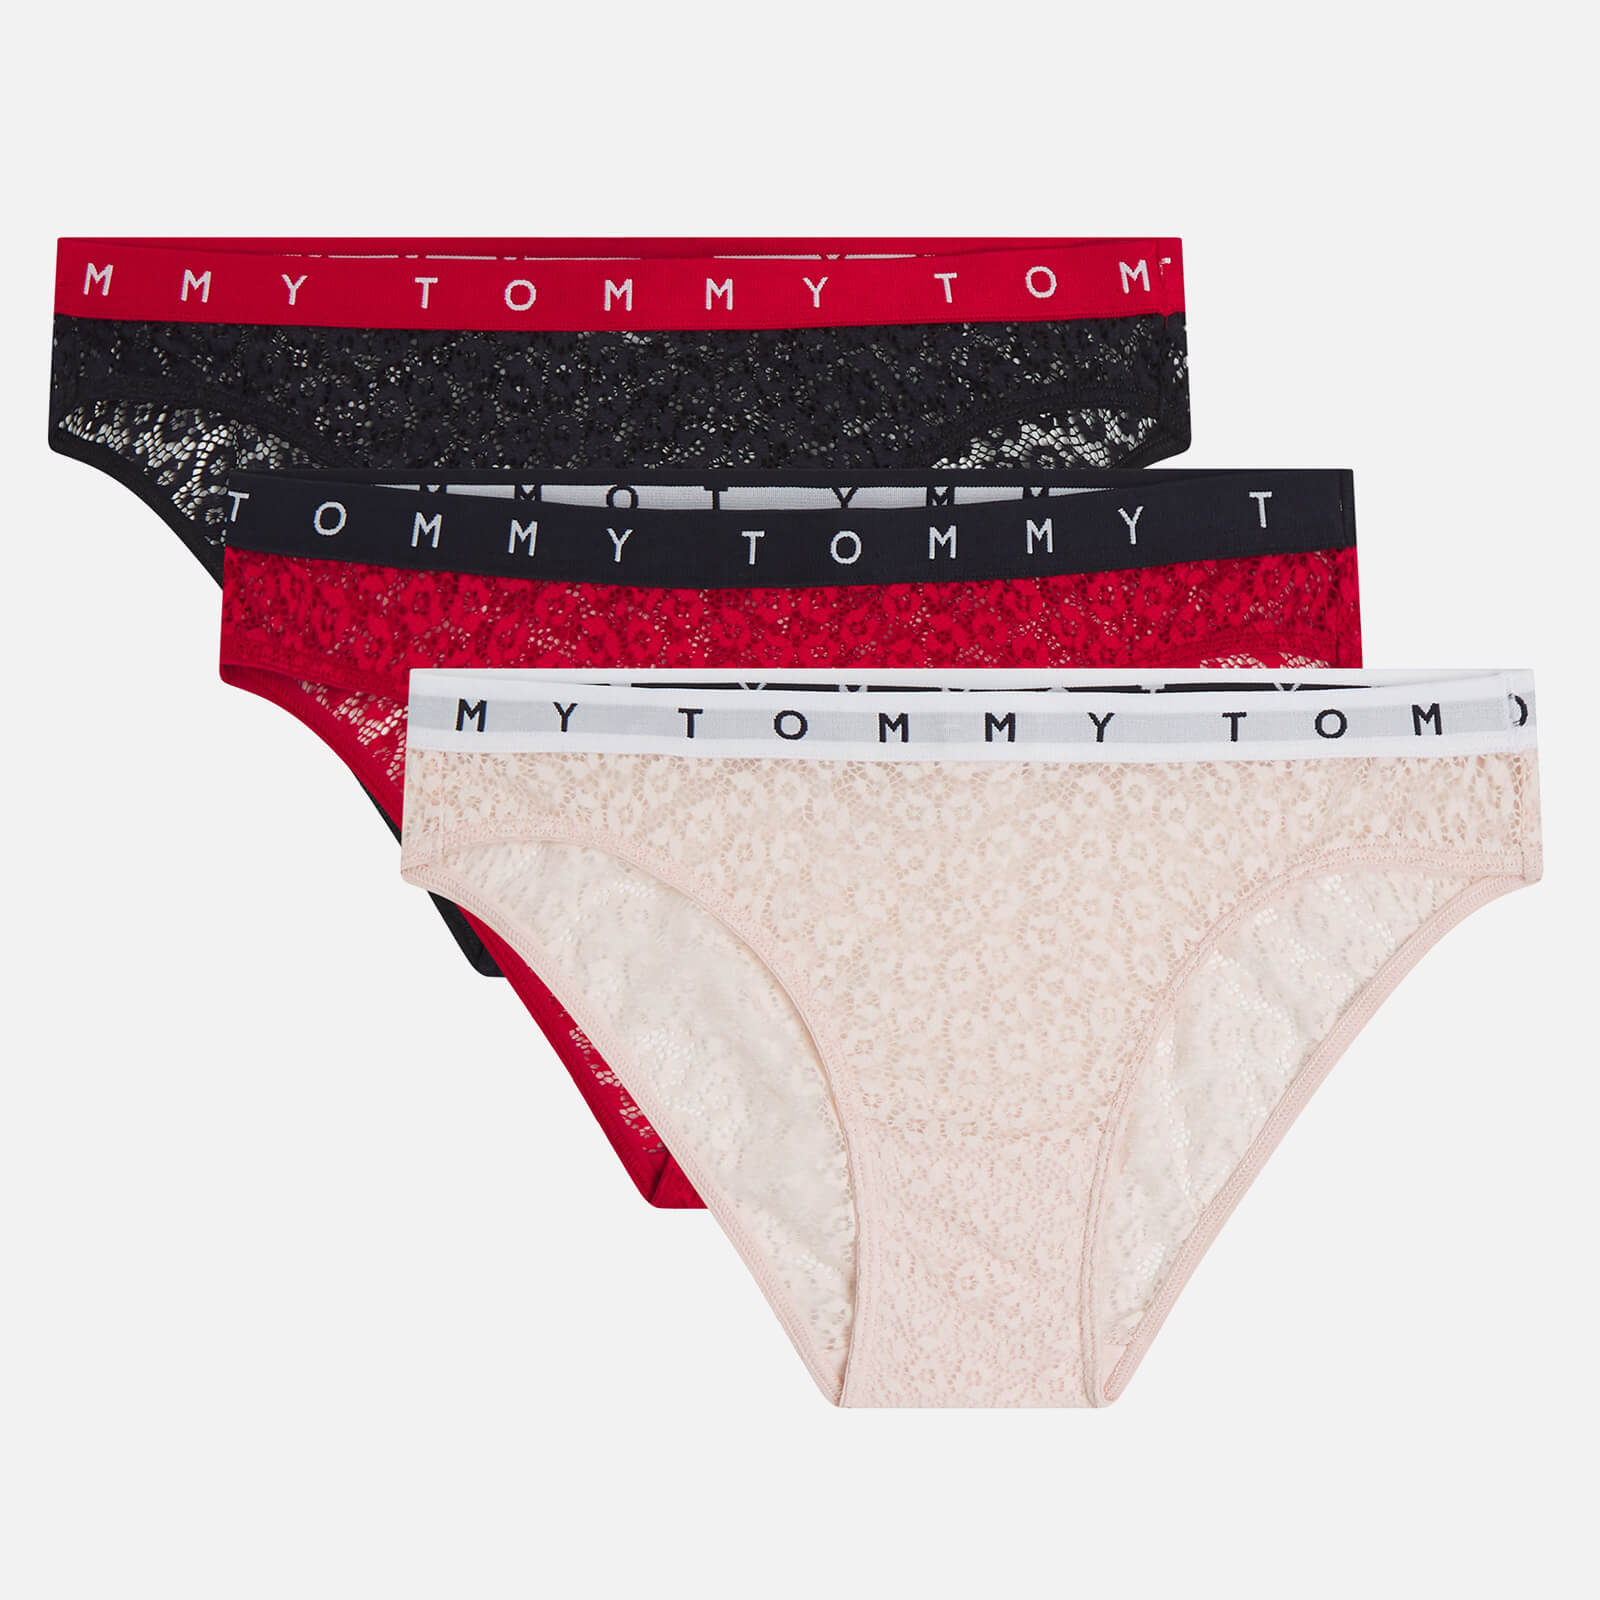 Tommy Hilfiger Women's 3-Pk Bikini - Desert Sky/Primary Red/Pale Pink - XS